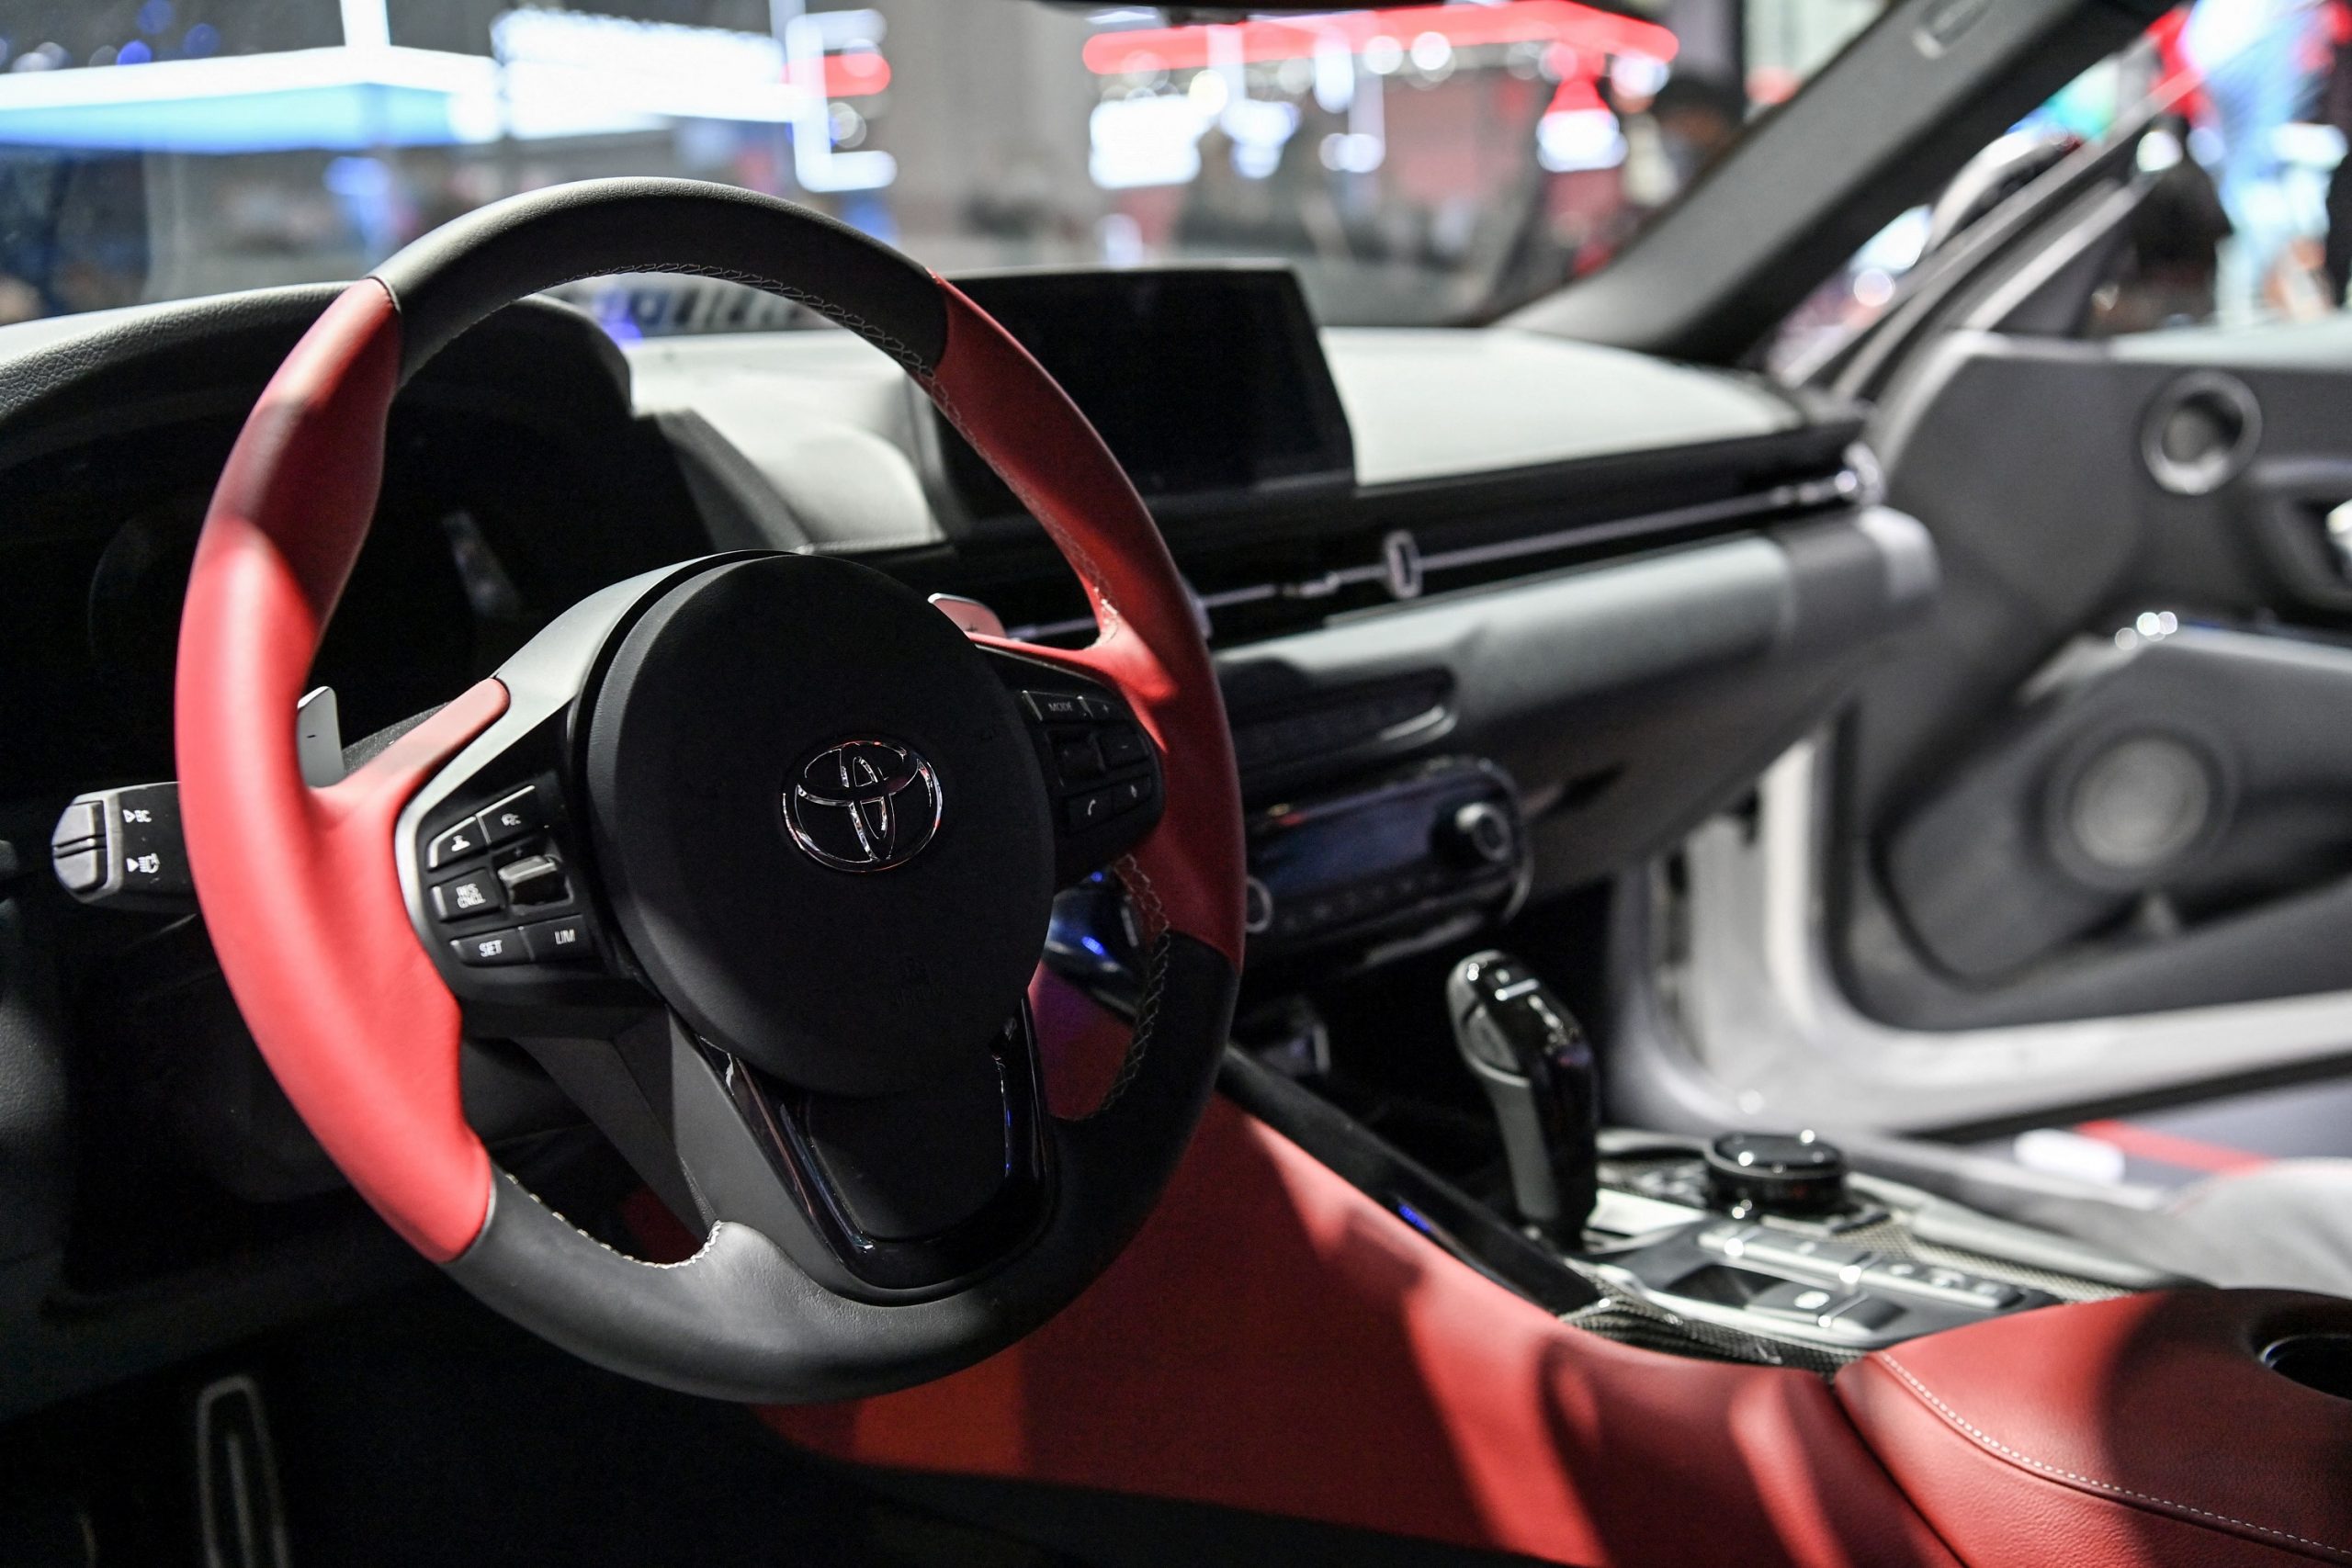 The interior of the new Toyota Supra